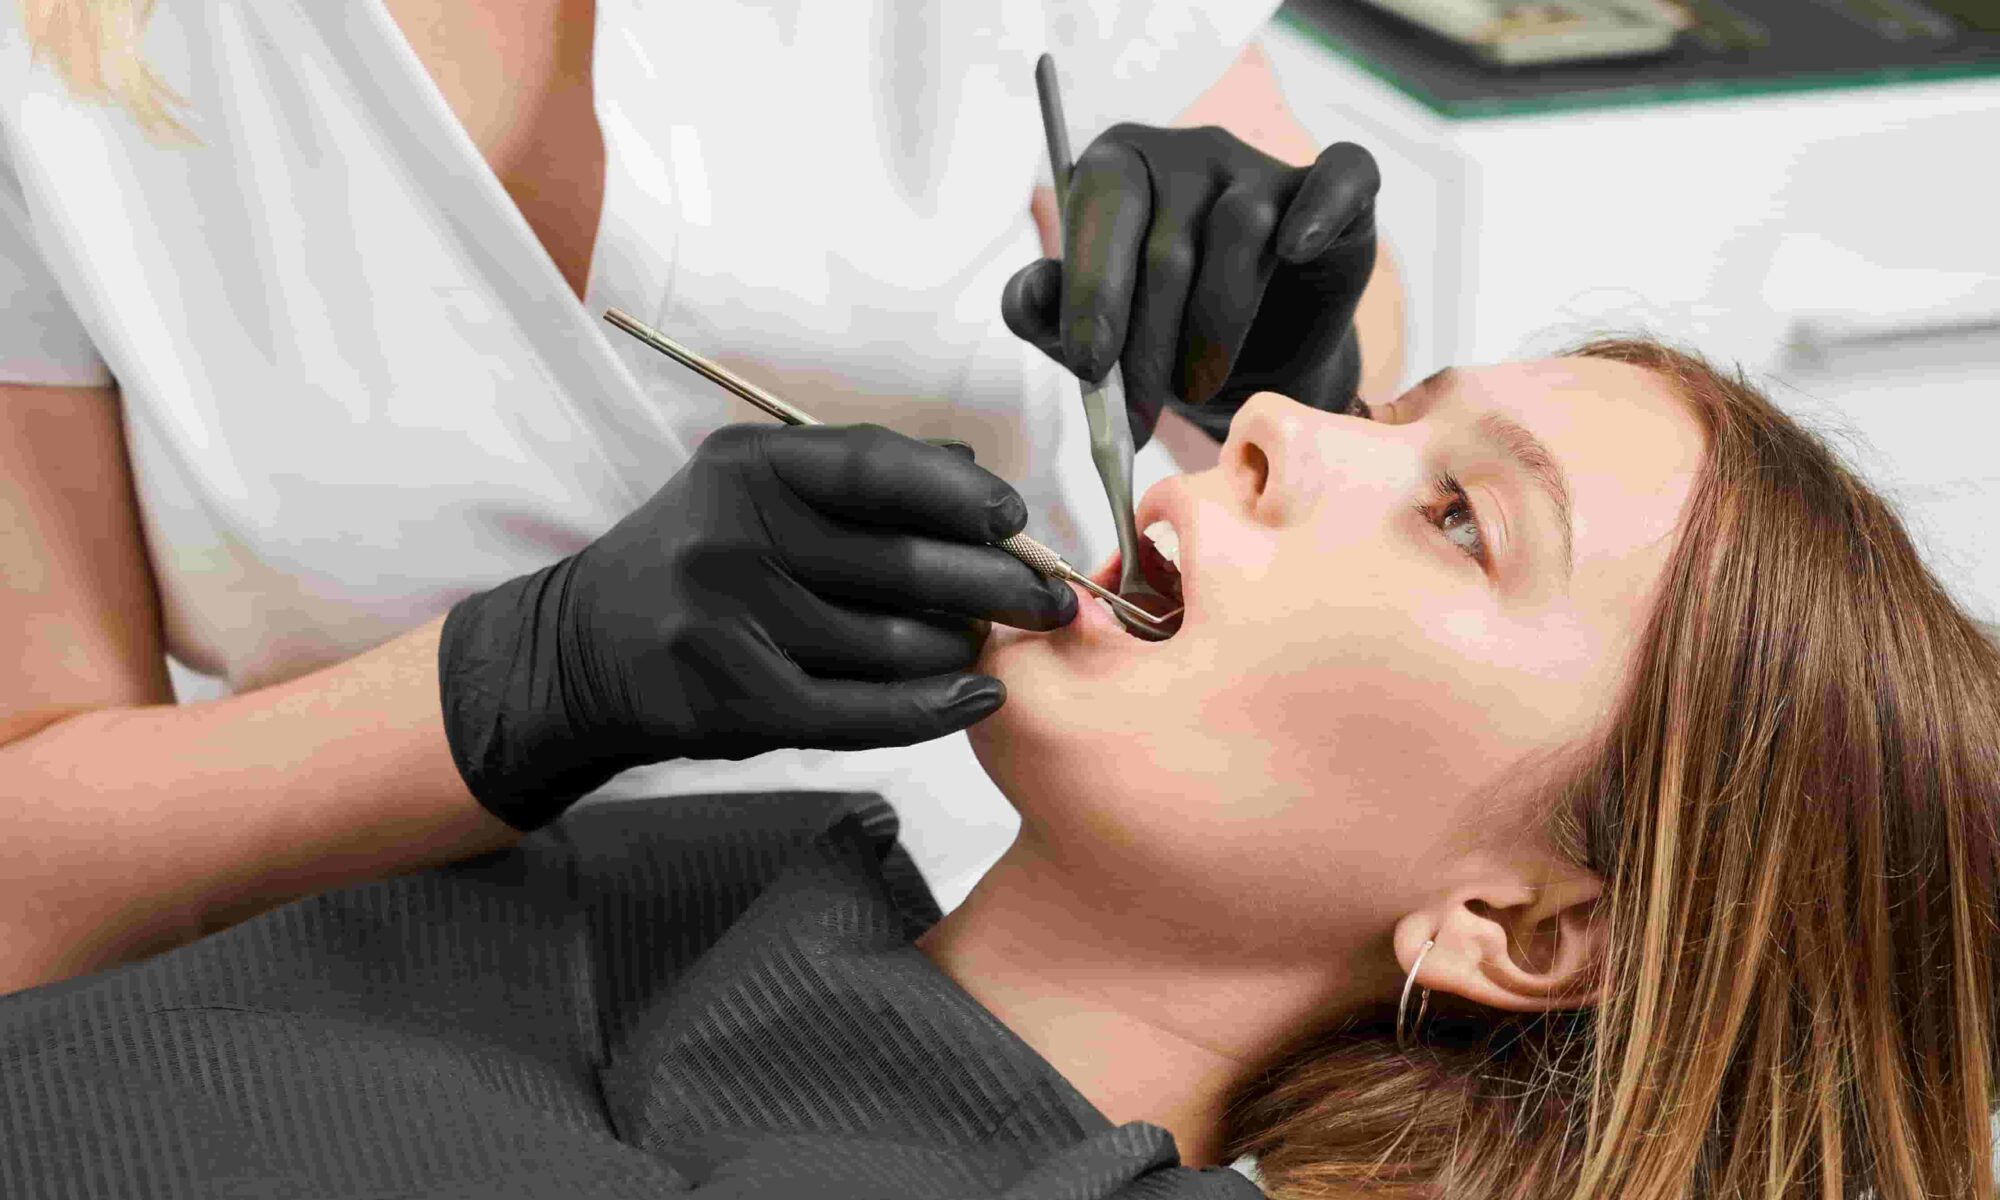 wisdom teeth removal